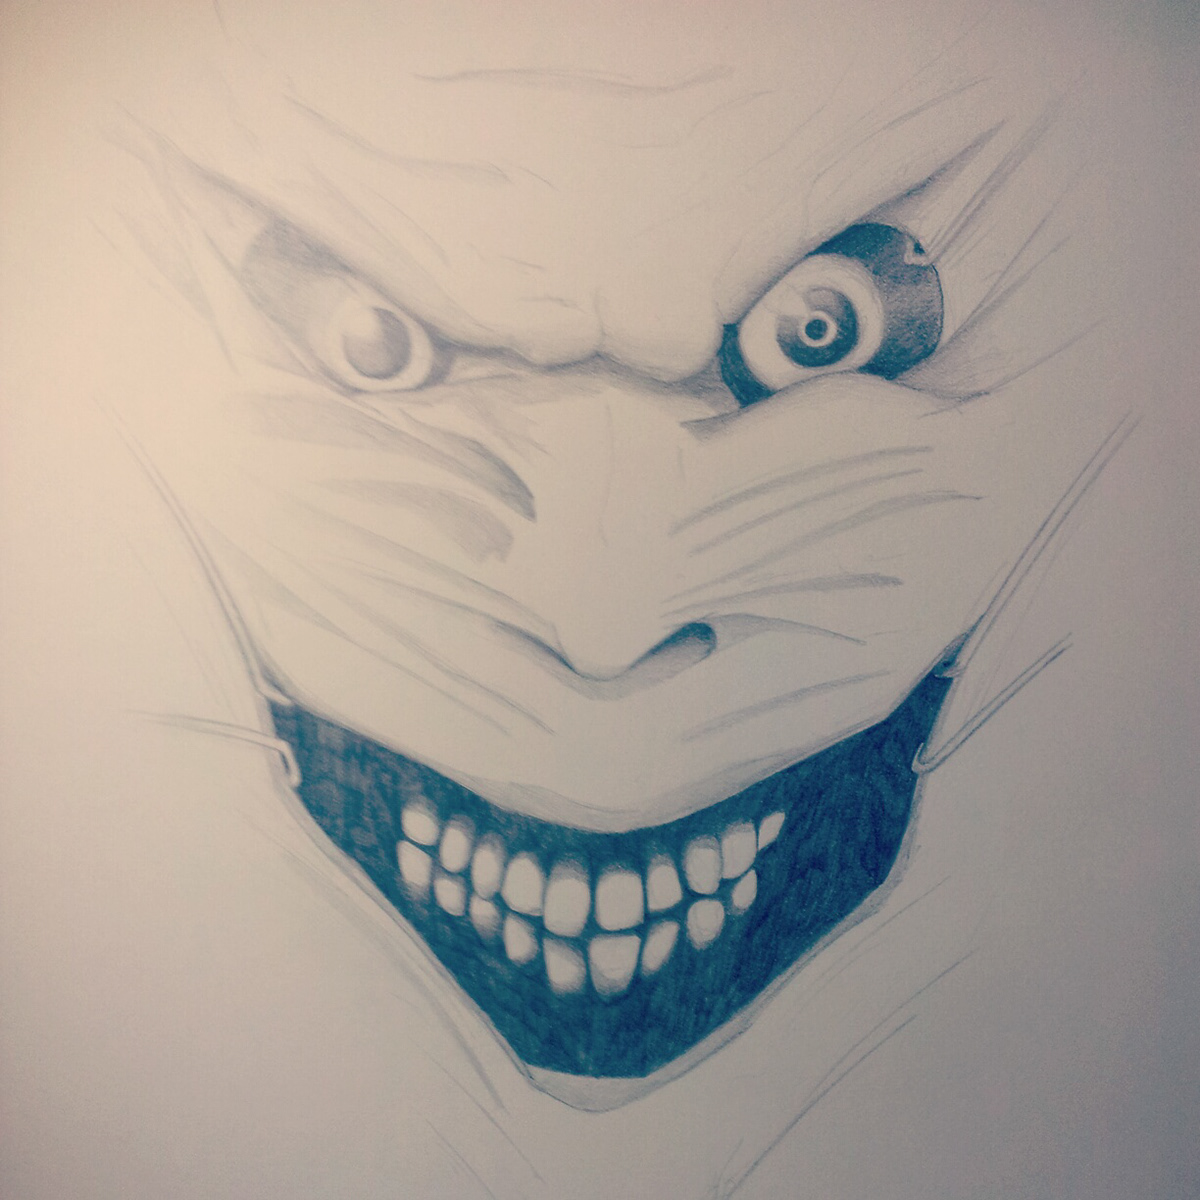 batman joker dc dccomics comics design Character horror creepy covers Cover Art black and white pencil rendering